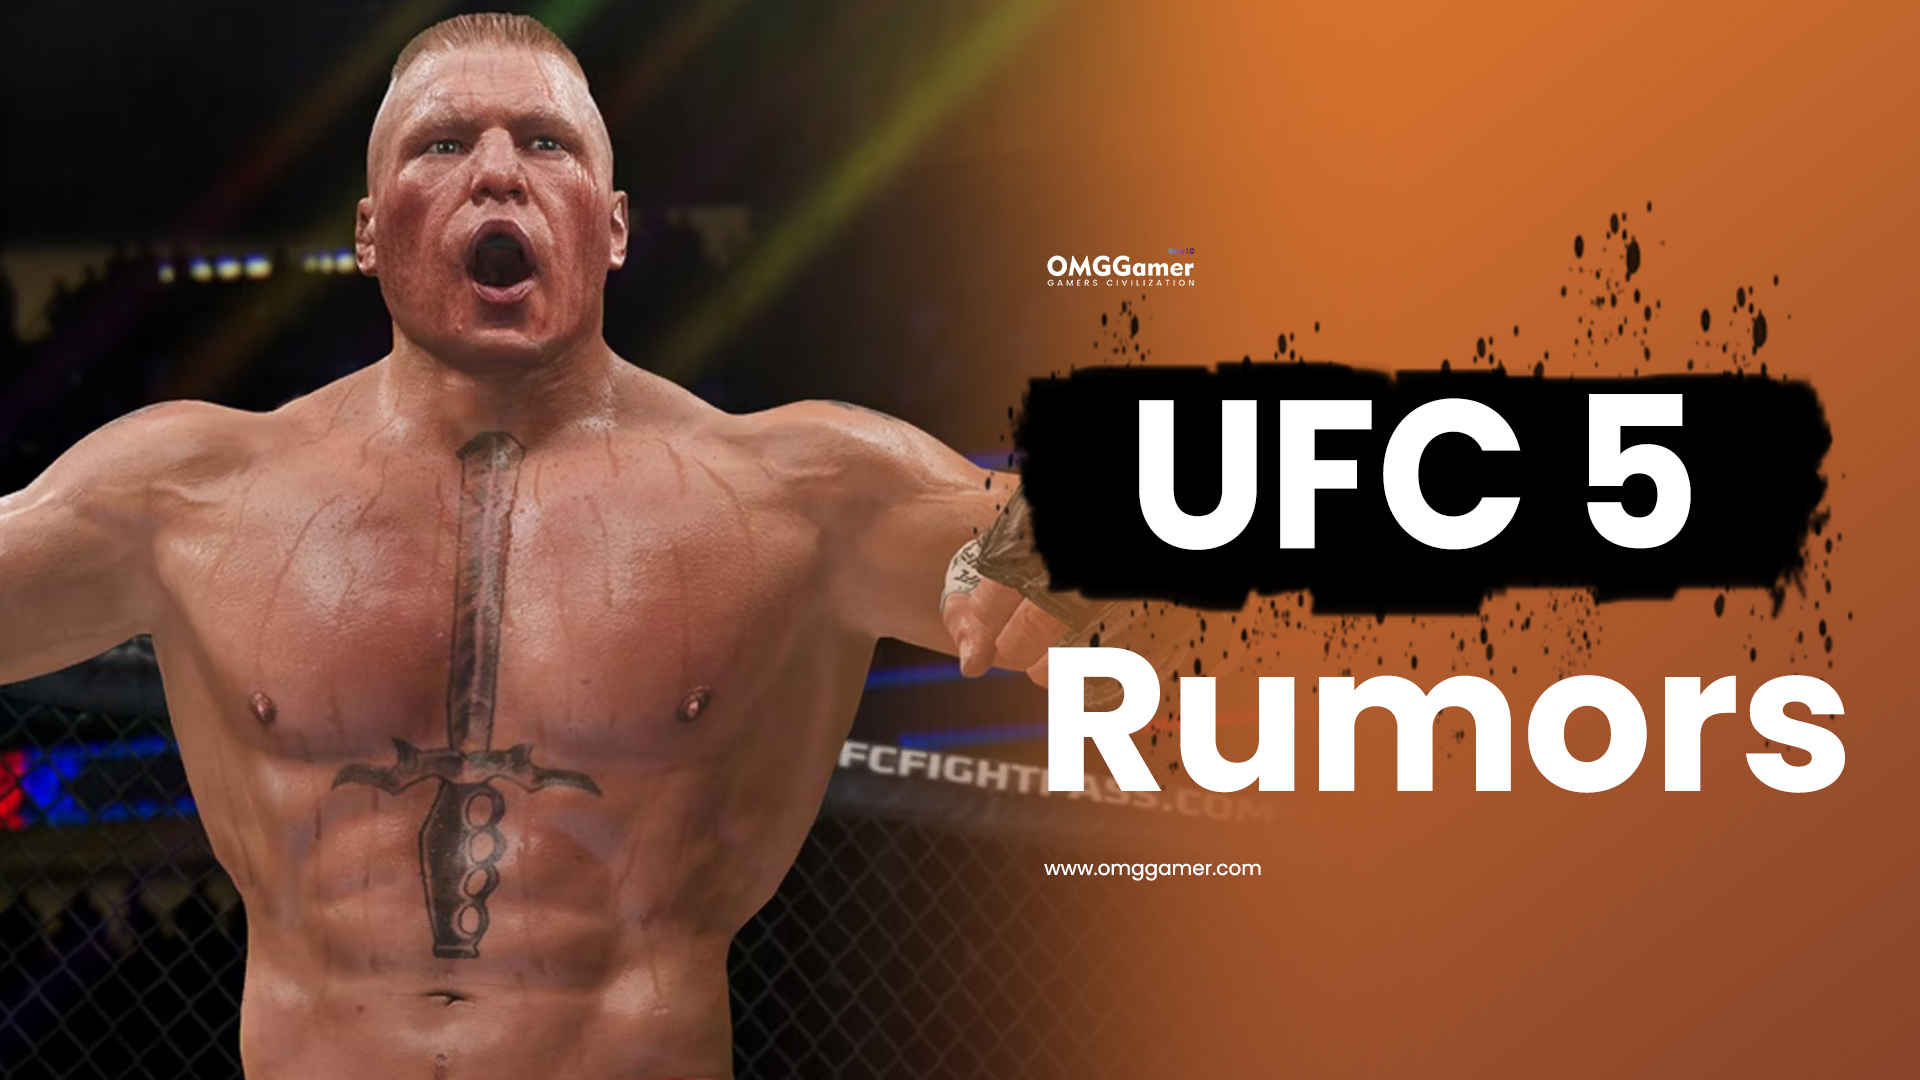 UFC 5 Rumors